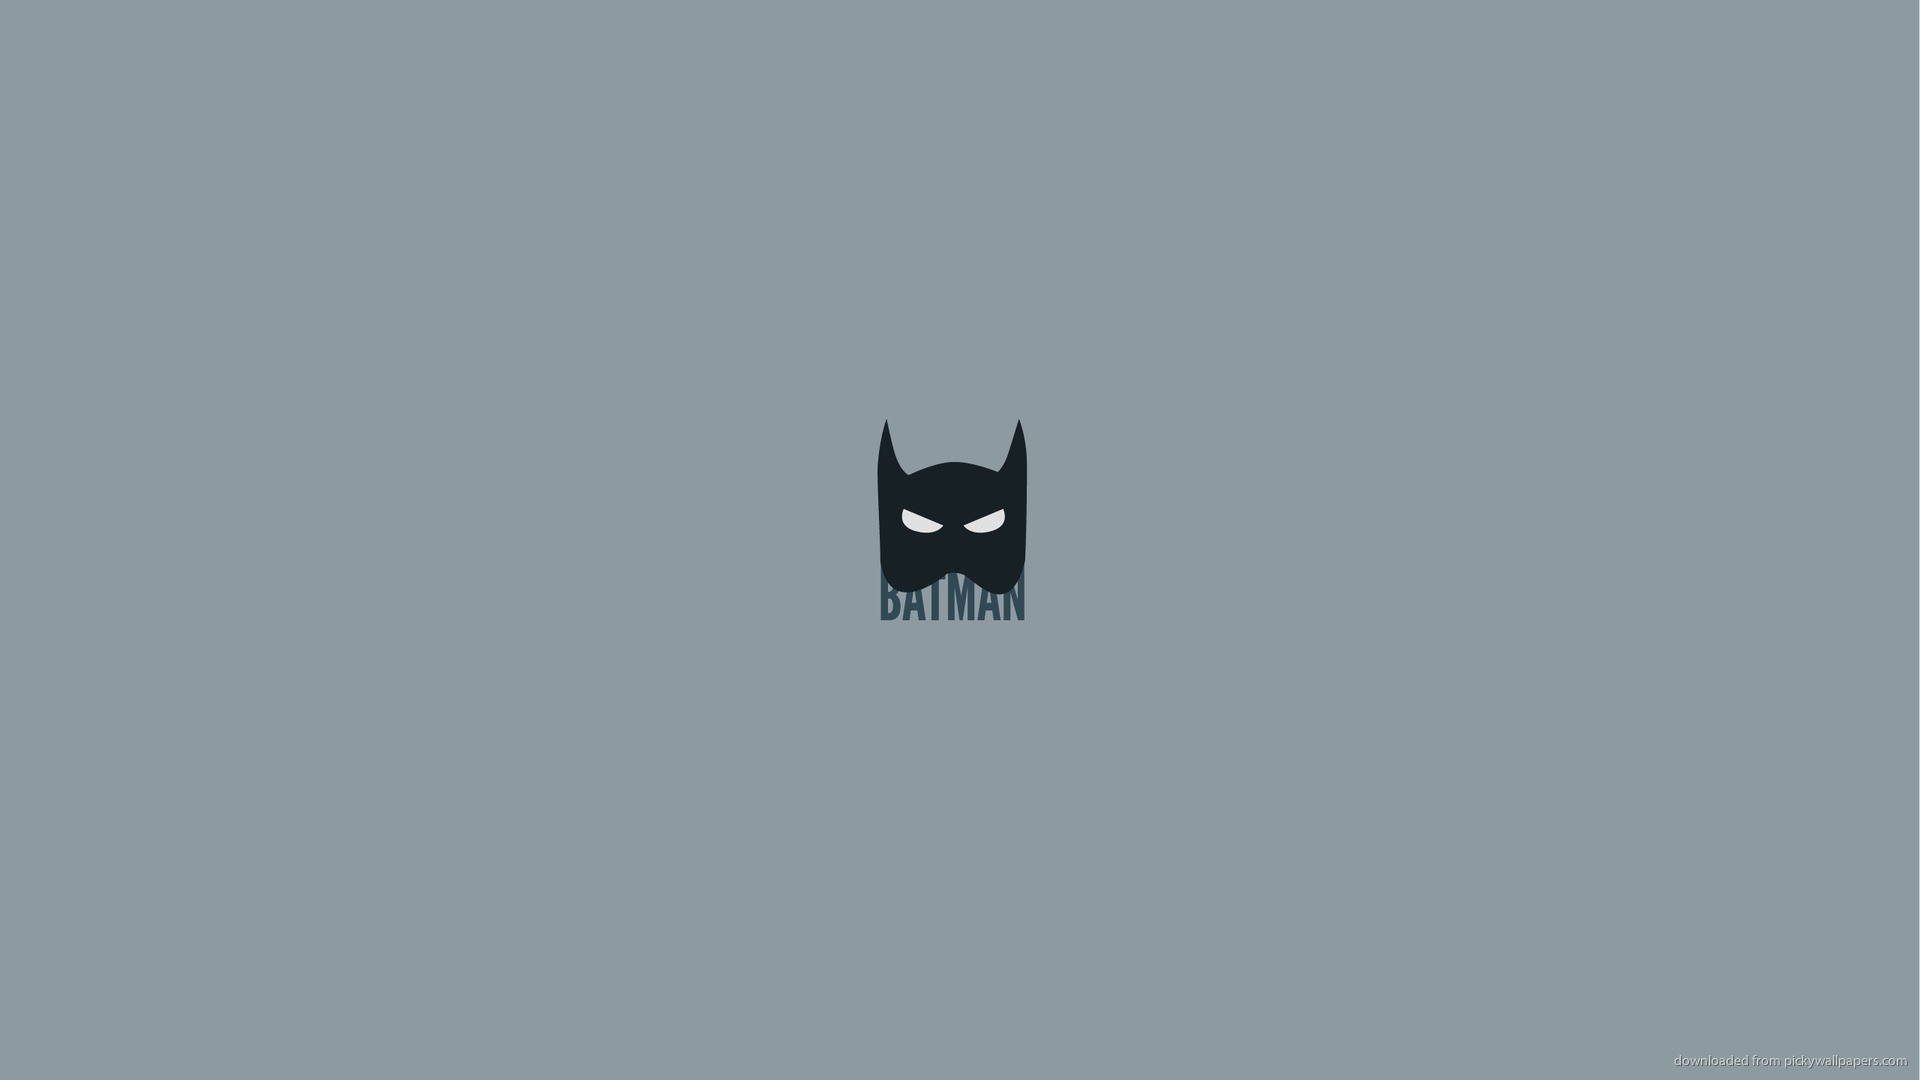 Minimal Batman picture